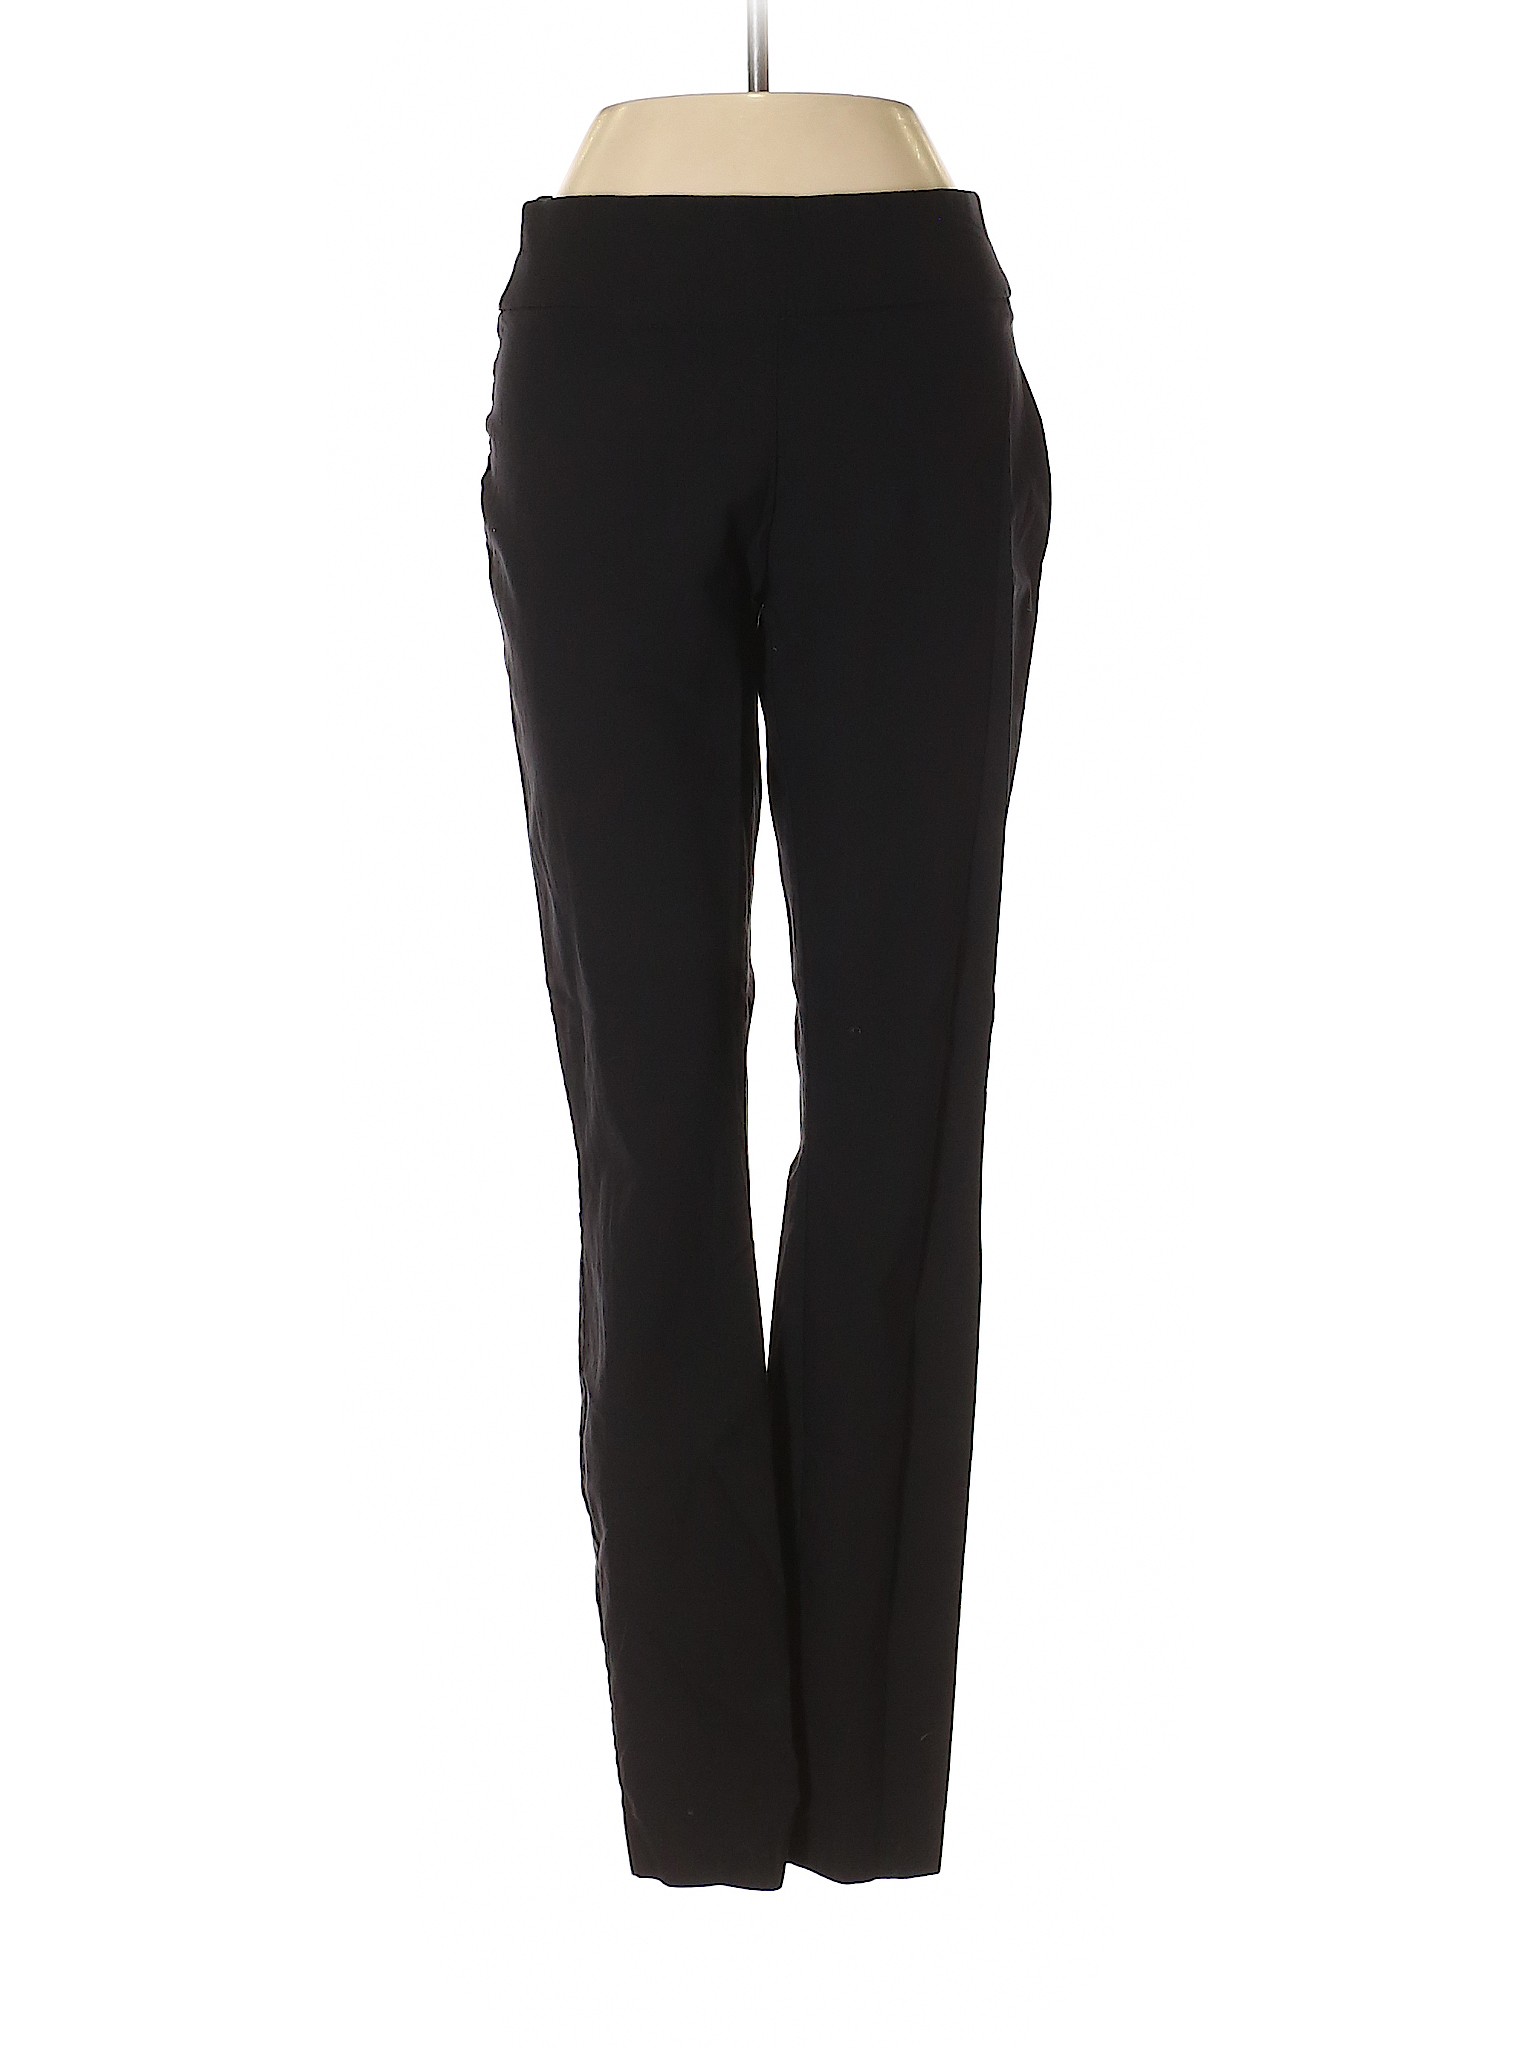 Apt. 9 Women Black Casual Pants 4 | eBay